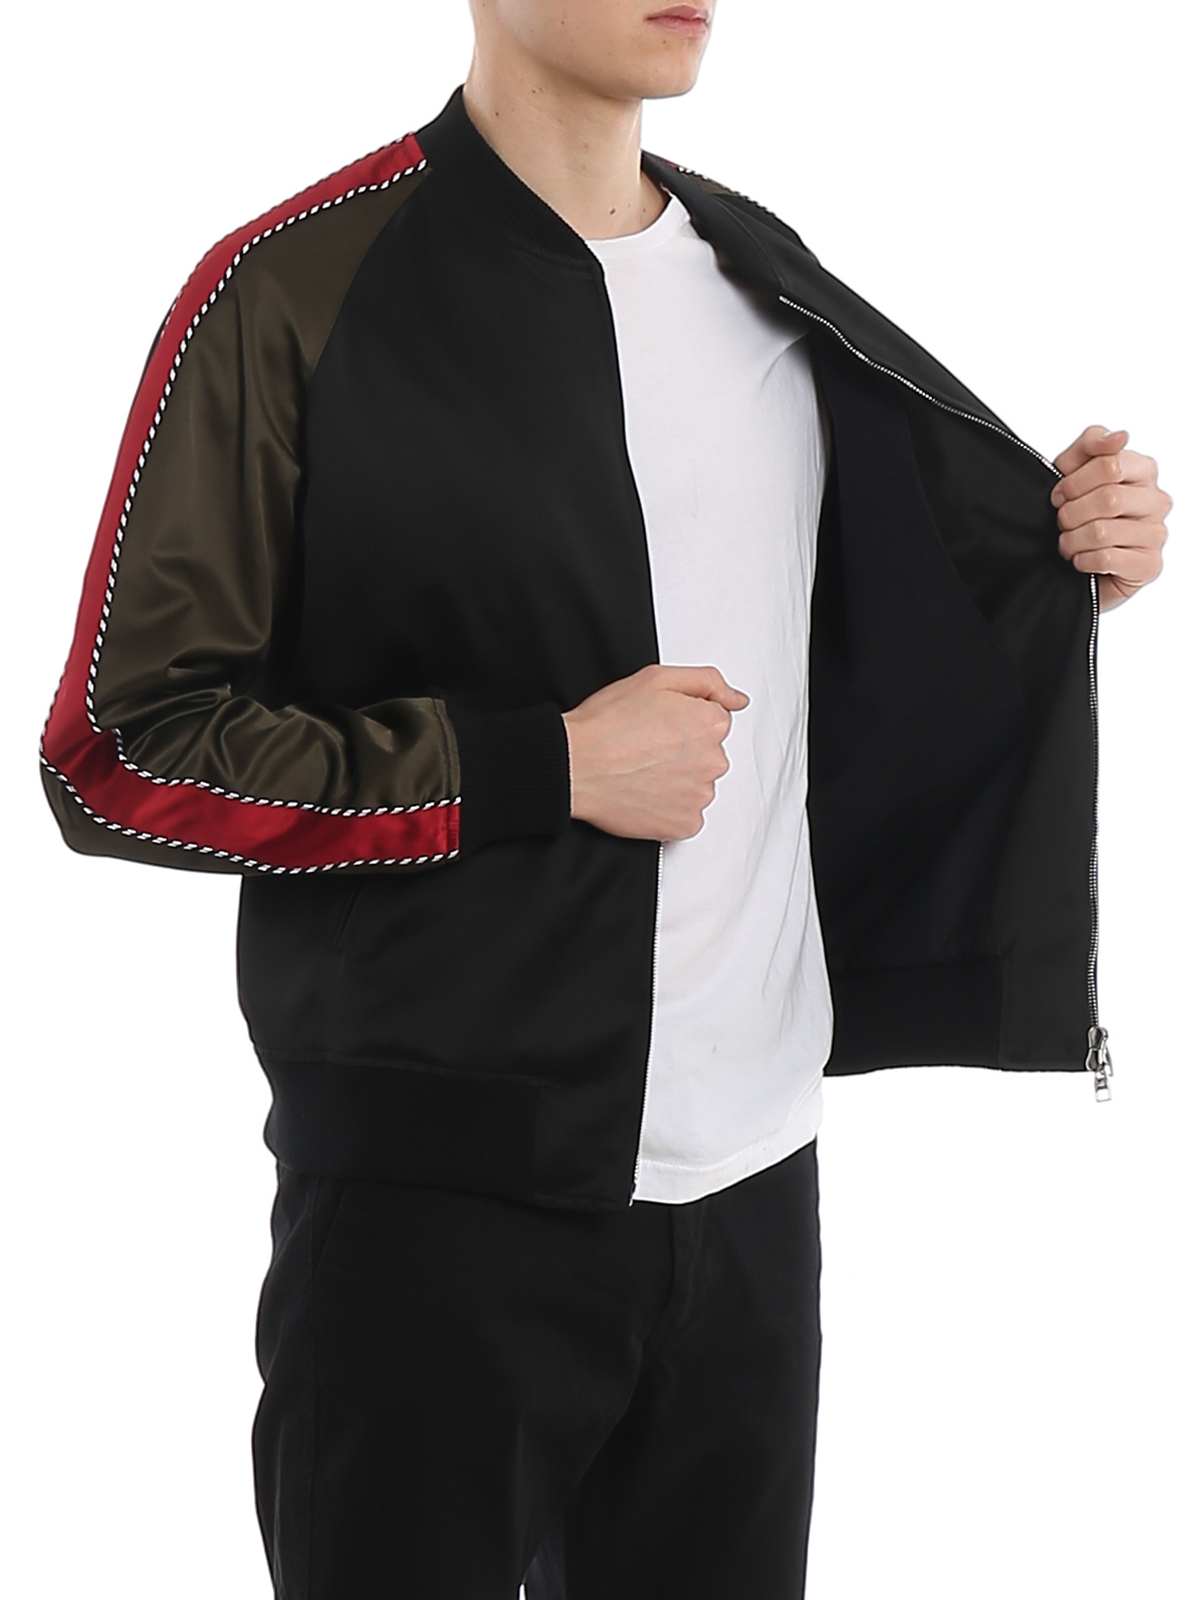 Reversible nylon bomber jacket with maxi monogram black - Men